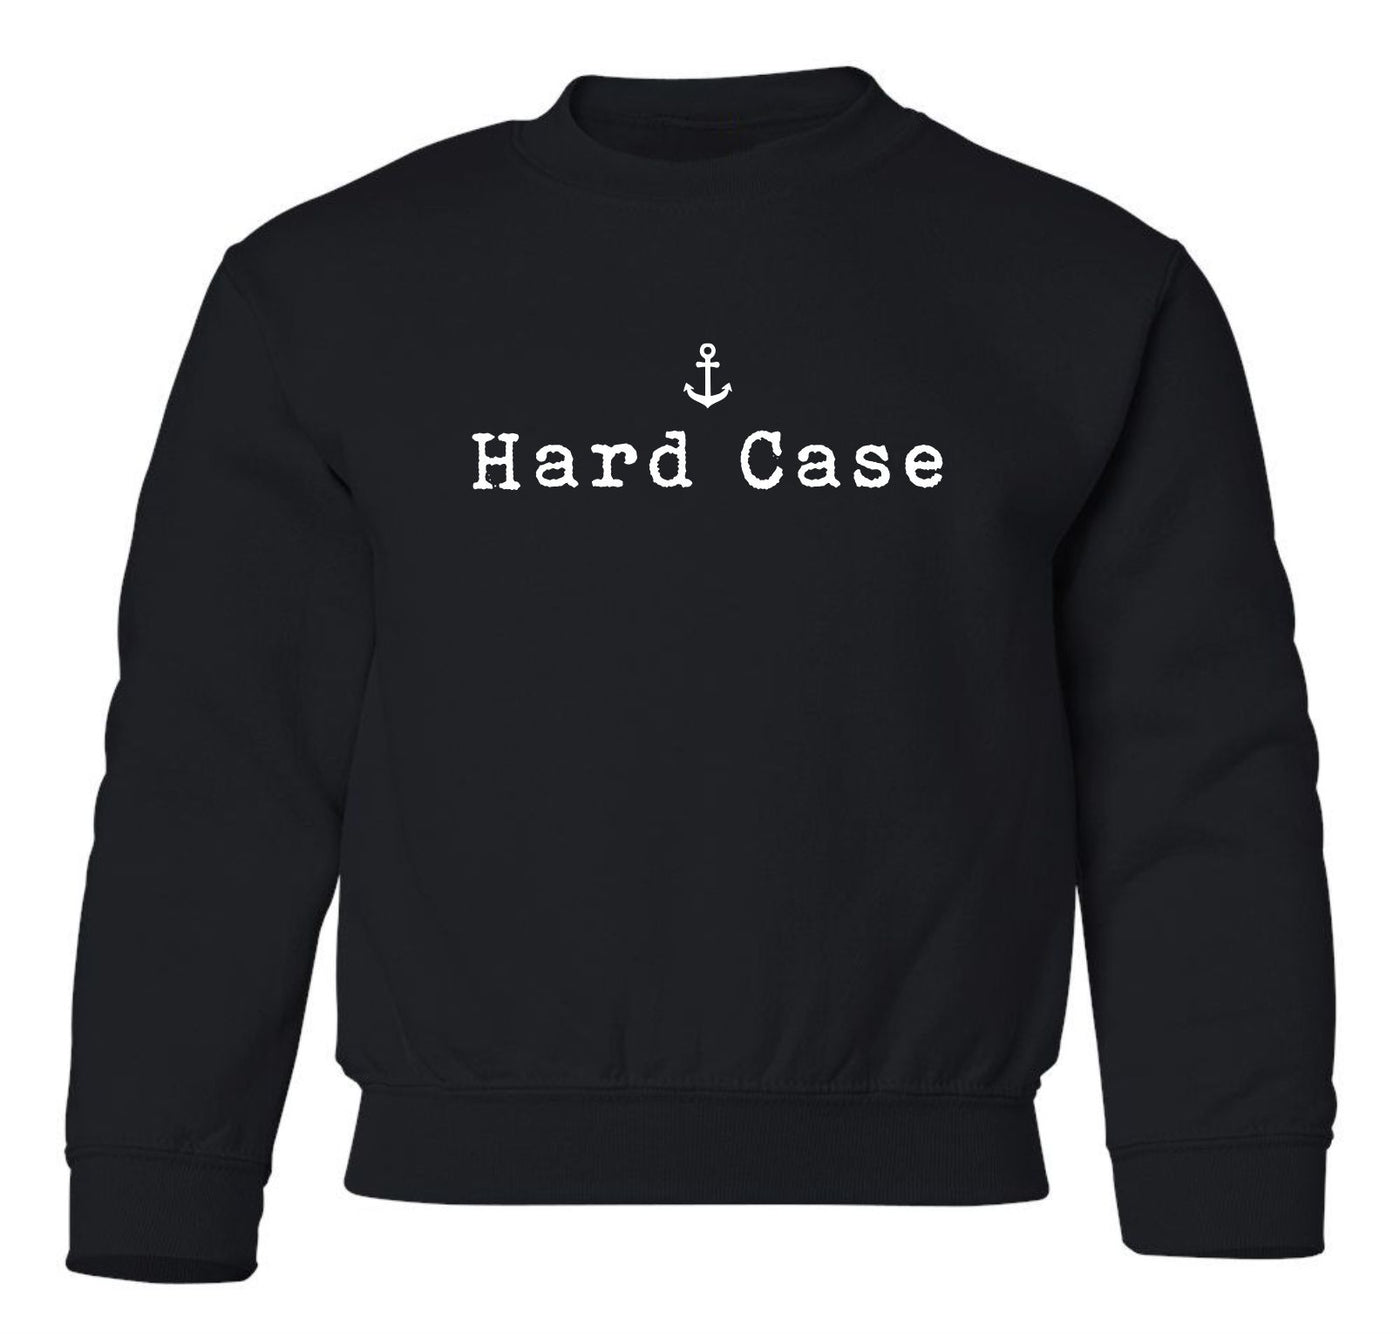 "Hard Case" Toddler/Youth Crewneck Sweatshirt